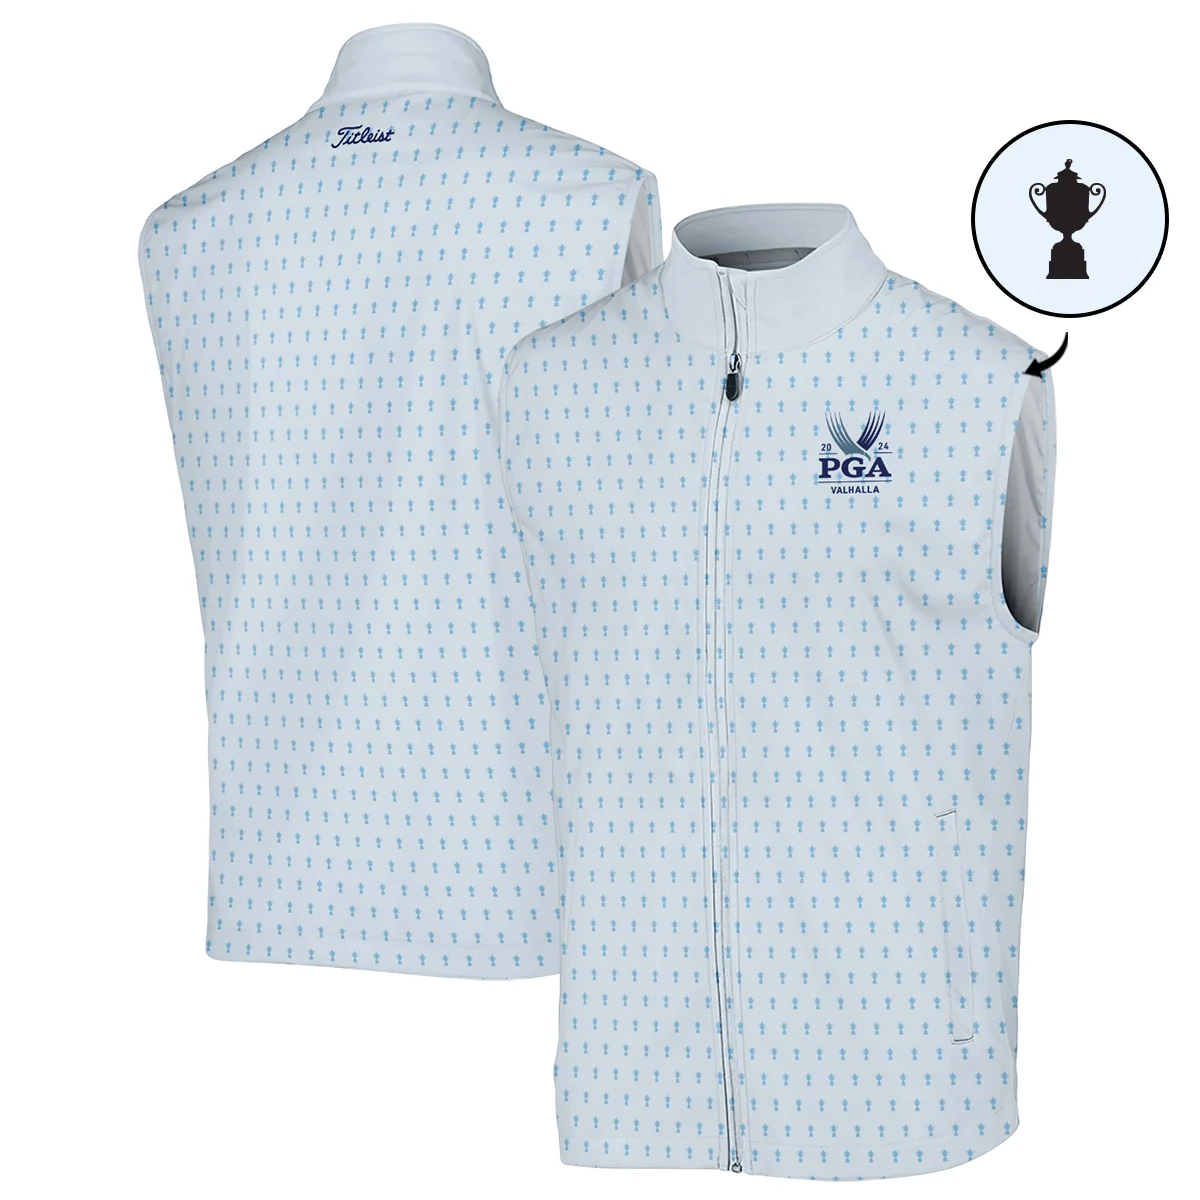 Golf Pattern Light Blue Cup 2024 PGA Championship Valhalla Titleist Zipper Polo Shirt Style Classic Zipper Polo Shirt For Men